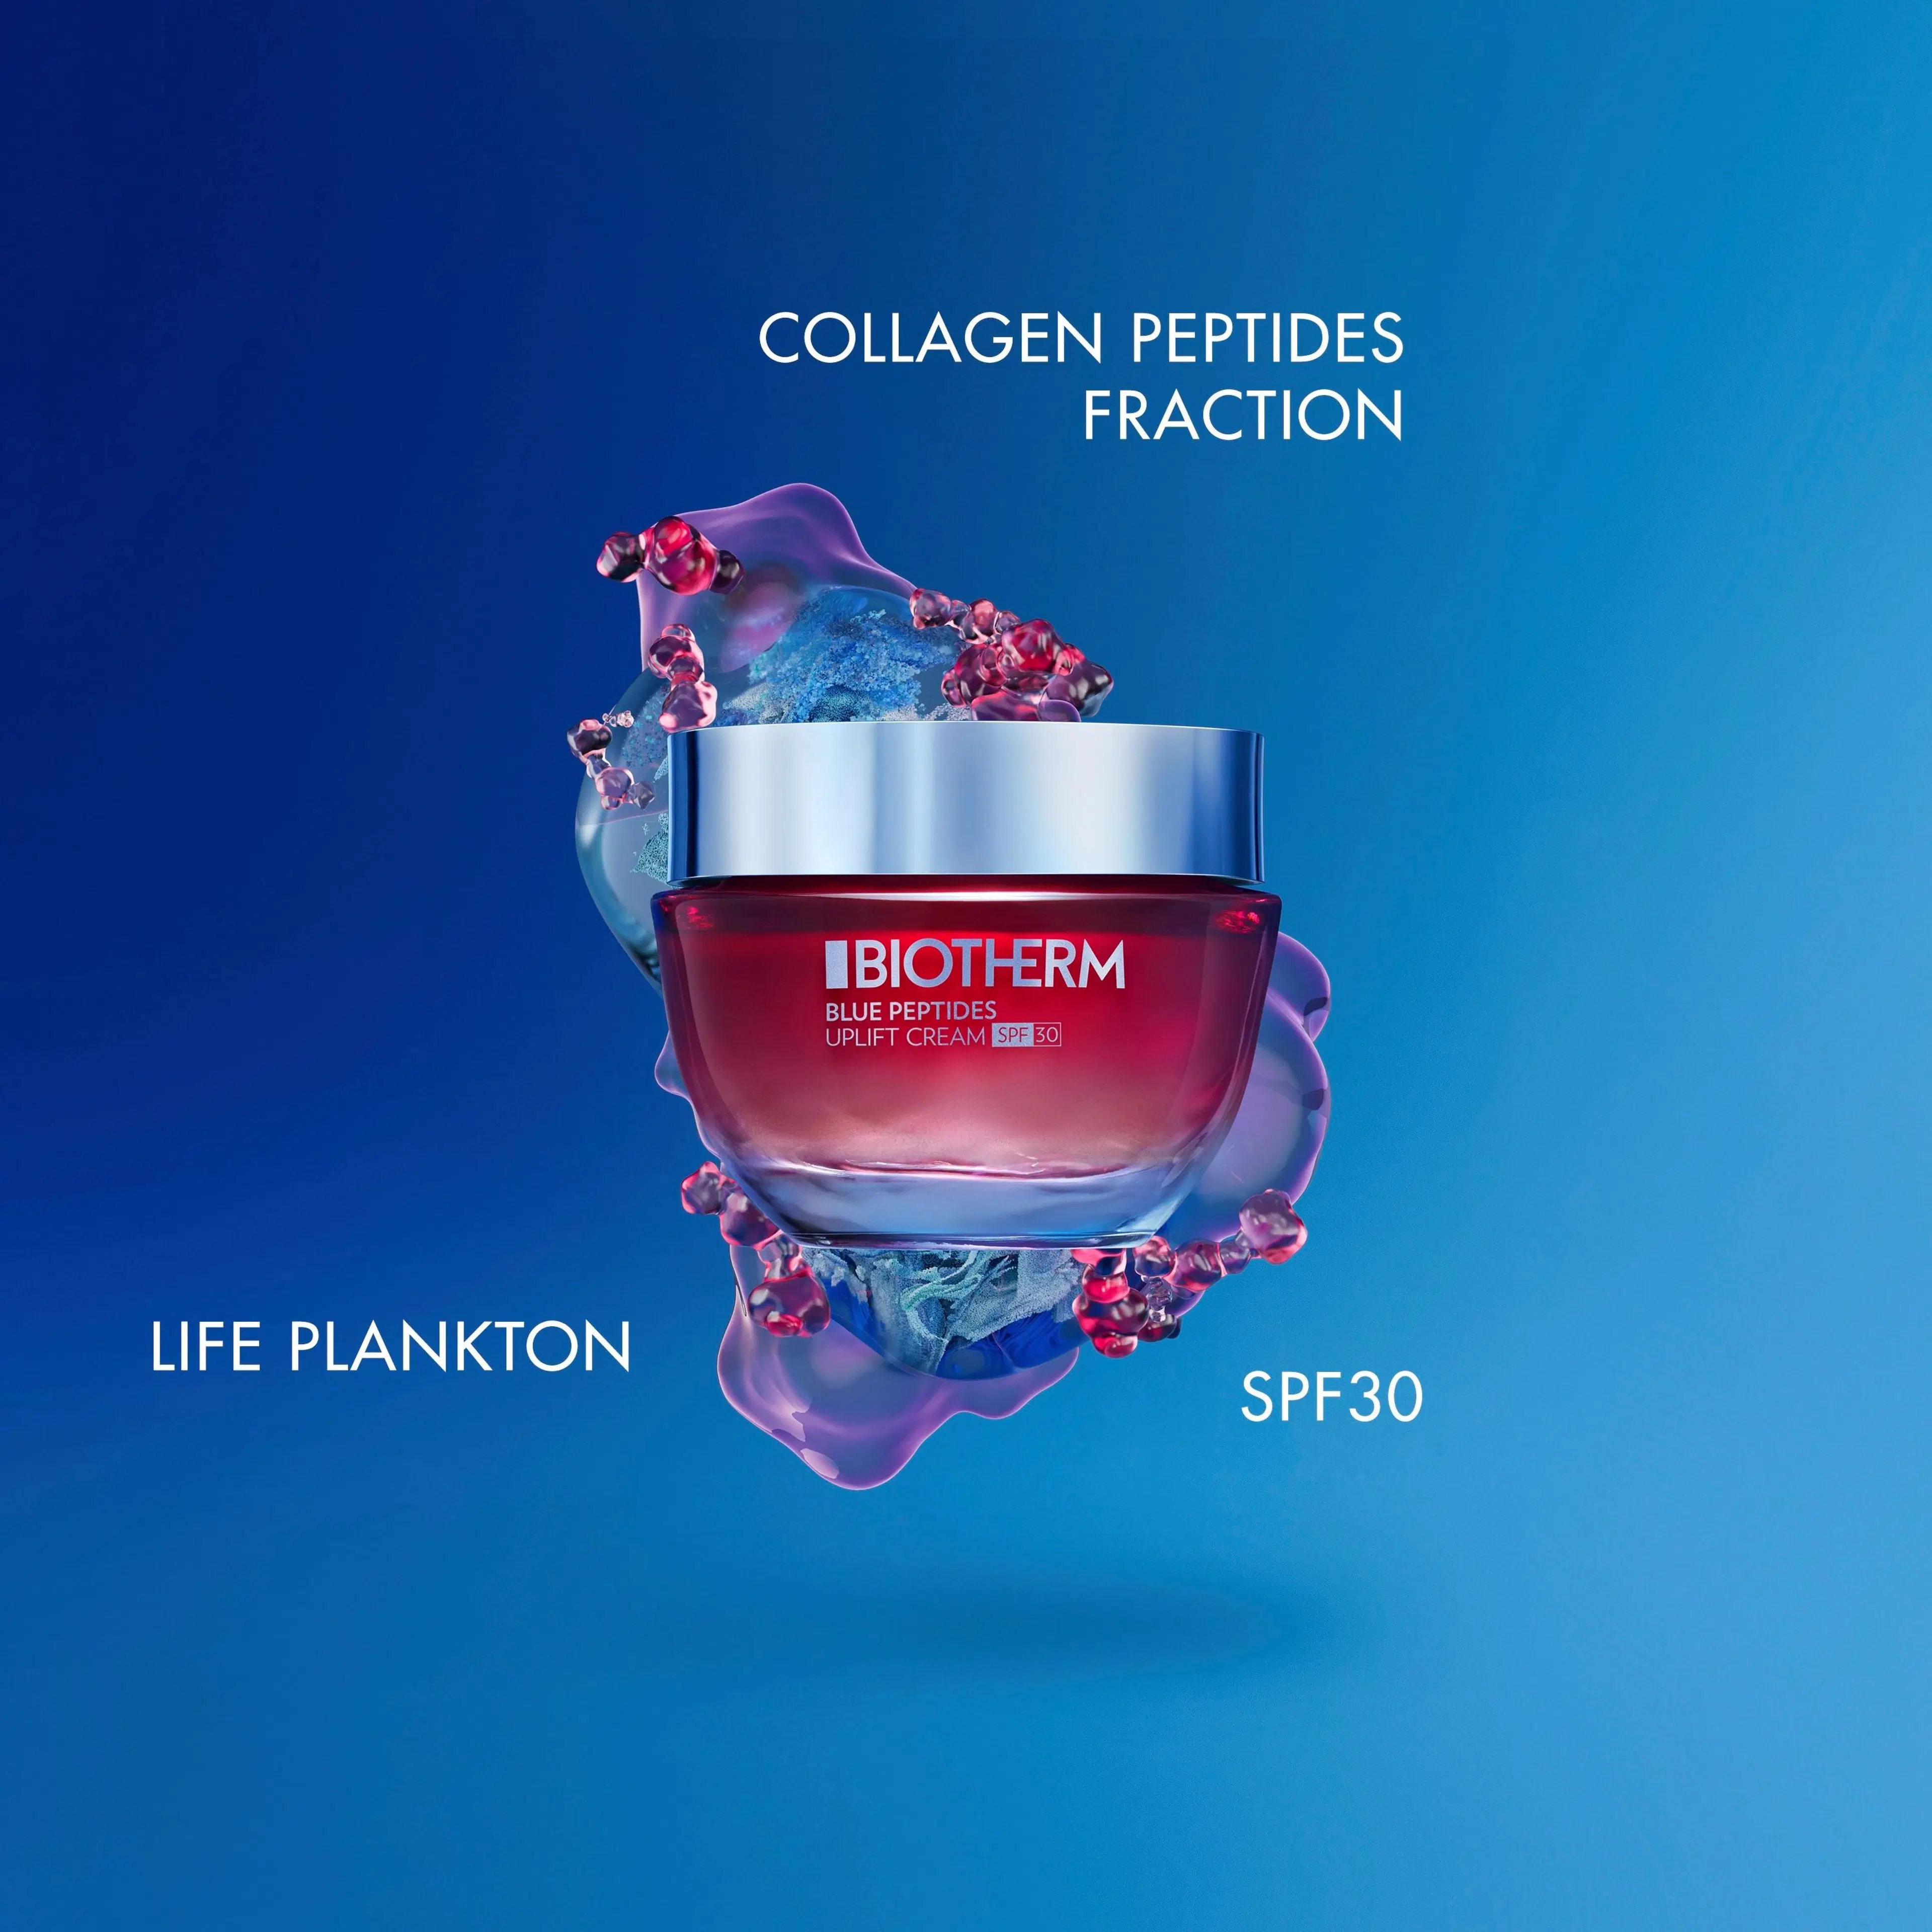 Biotherm Blue Peptides Uplift SPF30 Cream päivävoide 50 ml